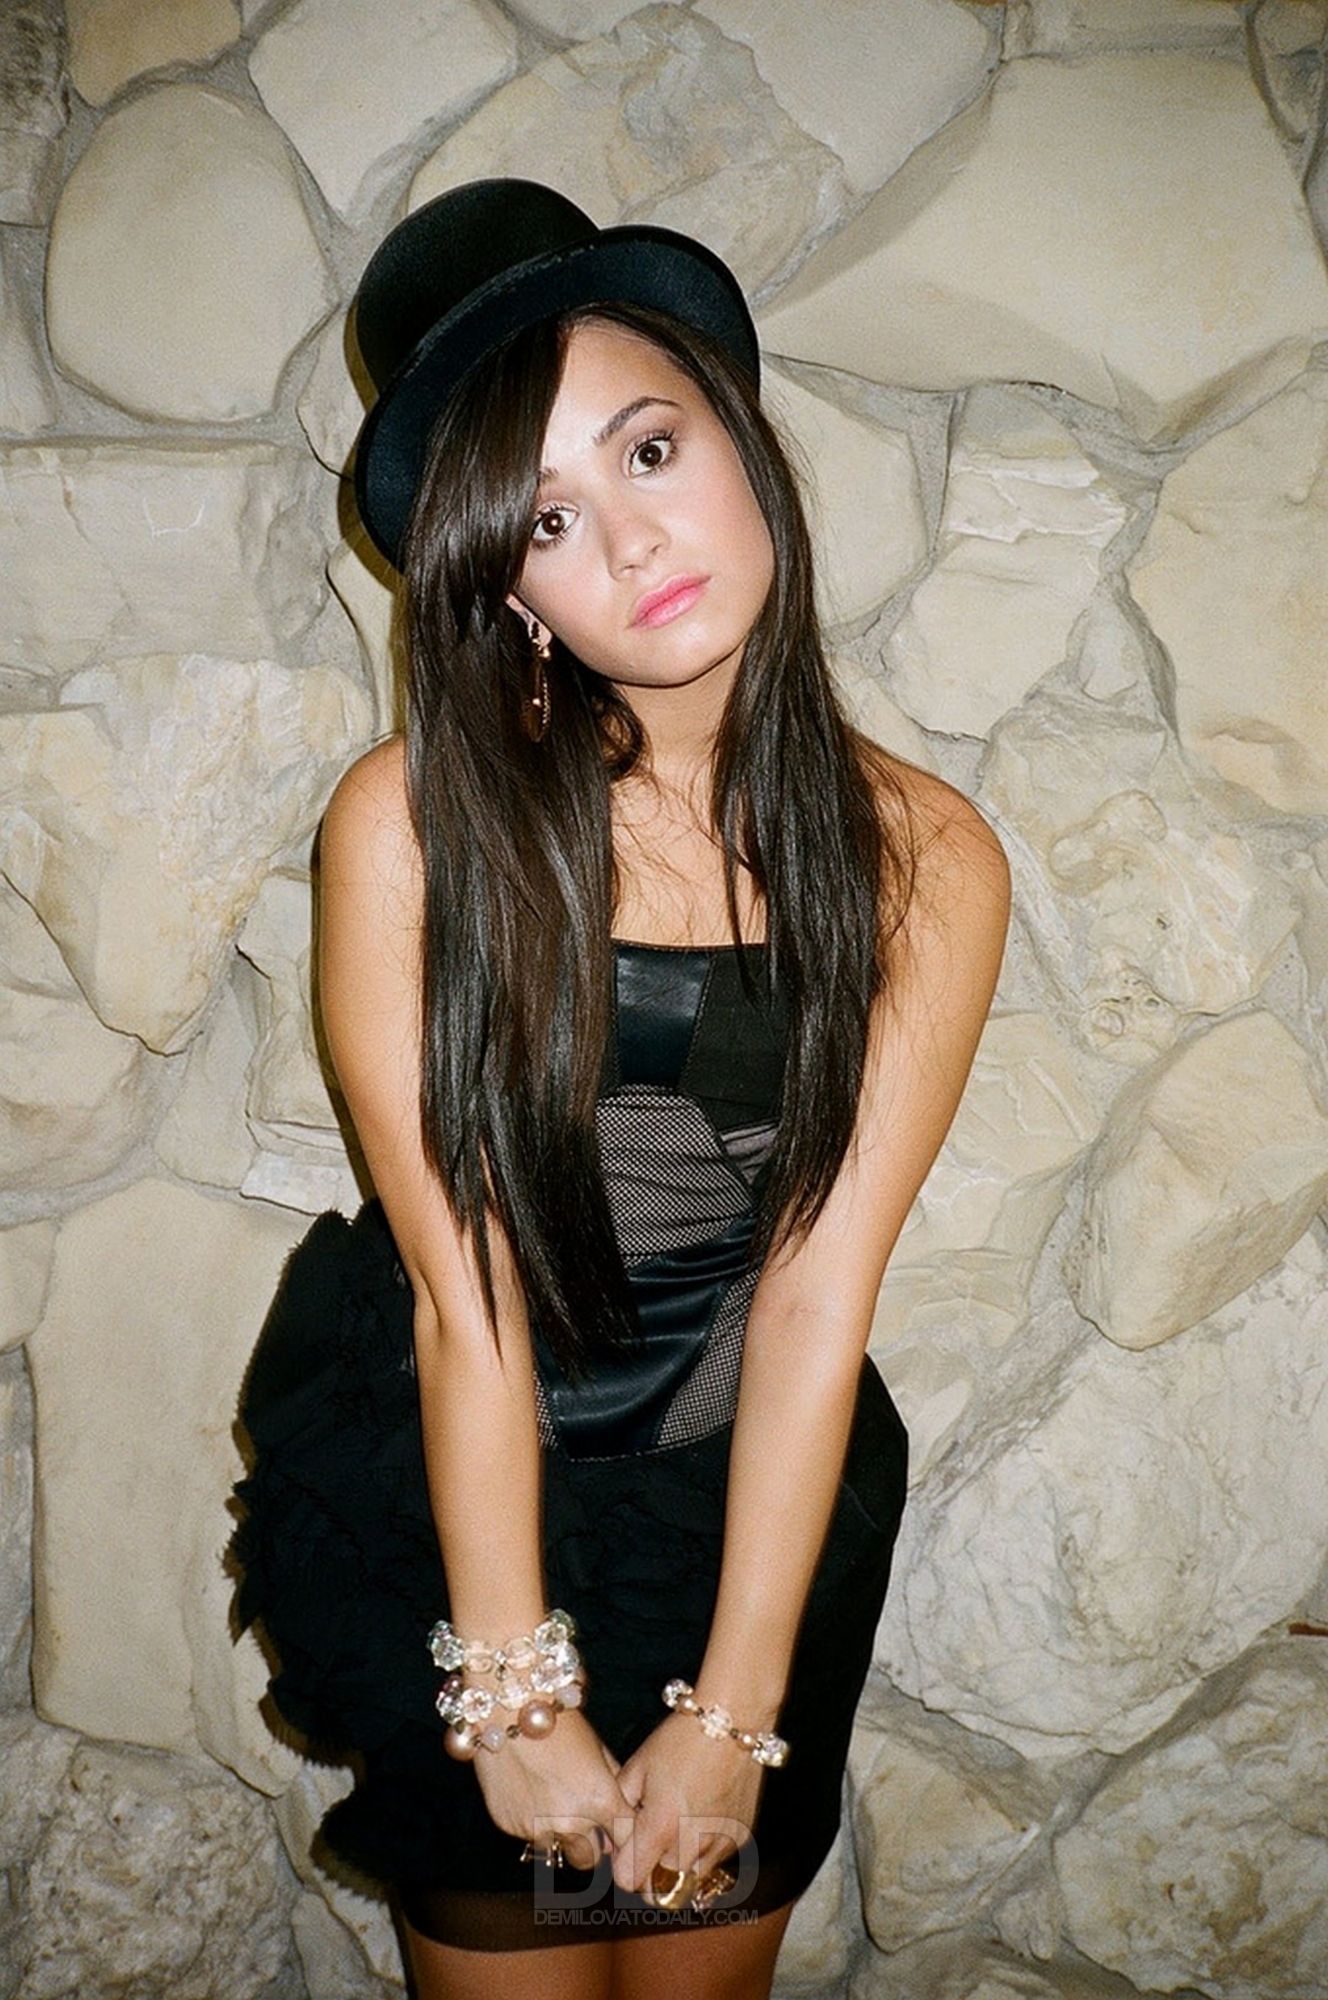 Demi Lovato - A Barrett 2009 for WWD magazine photoshoot - Anichu90 Photo (16795063 ...